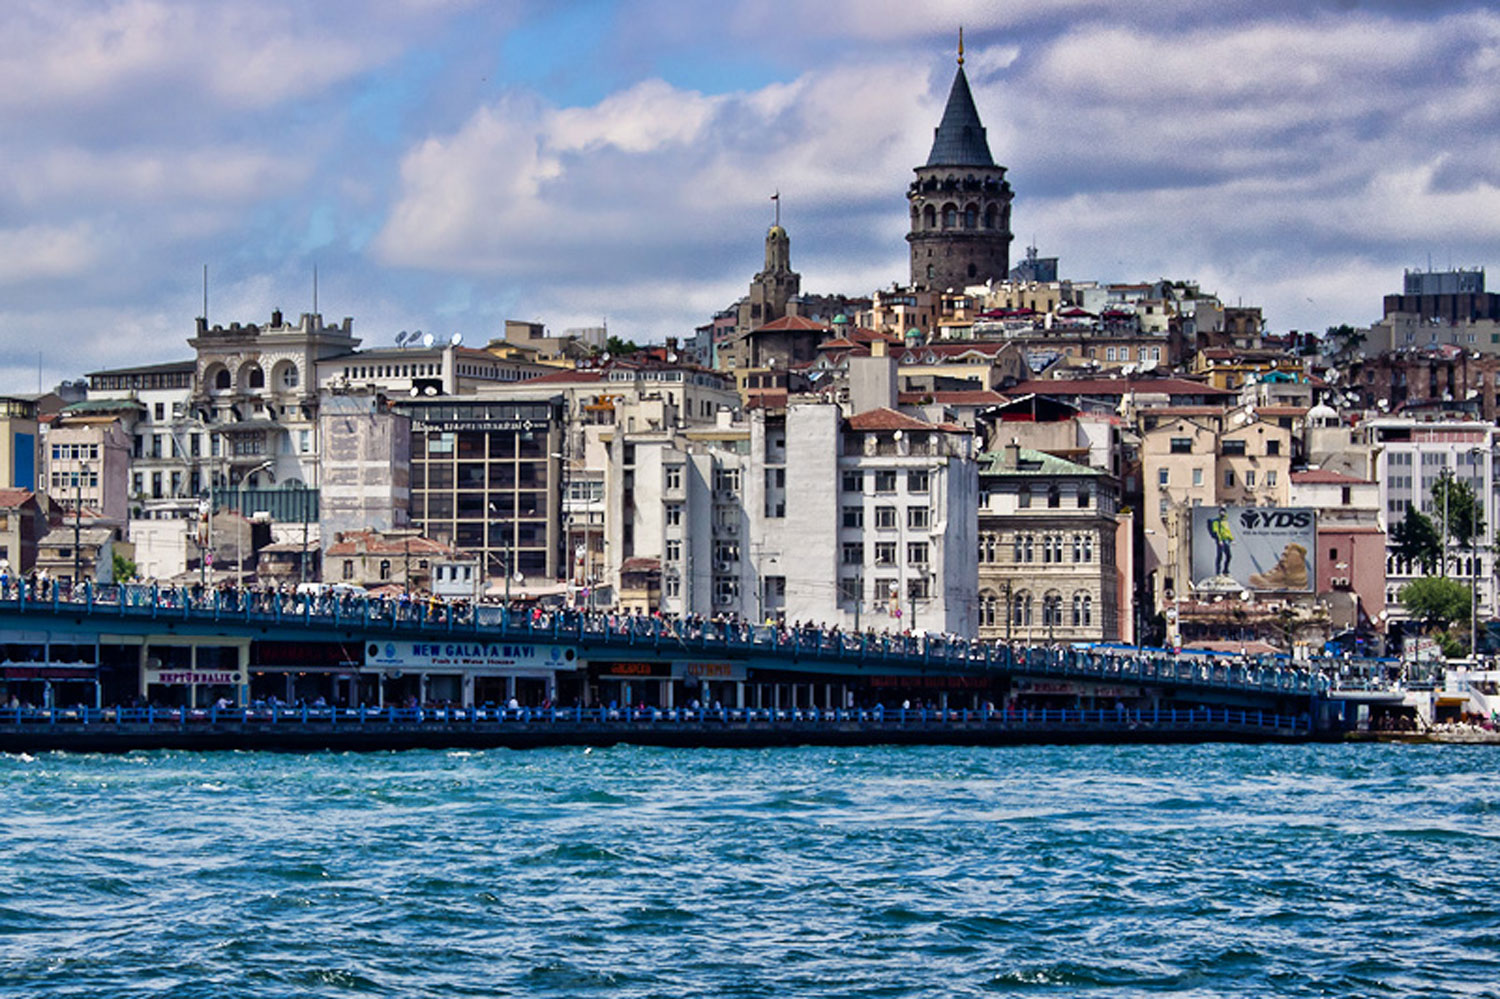 Soaking in the Bosphorus